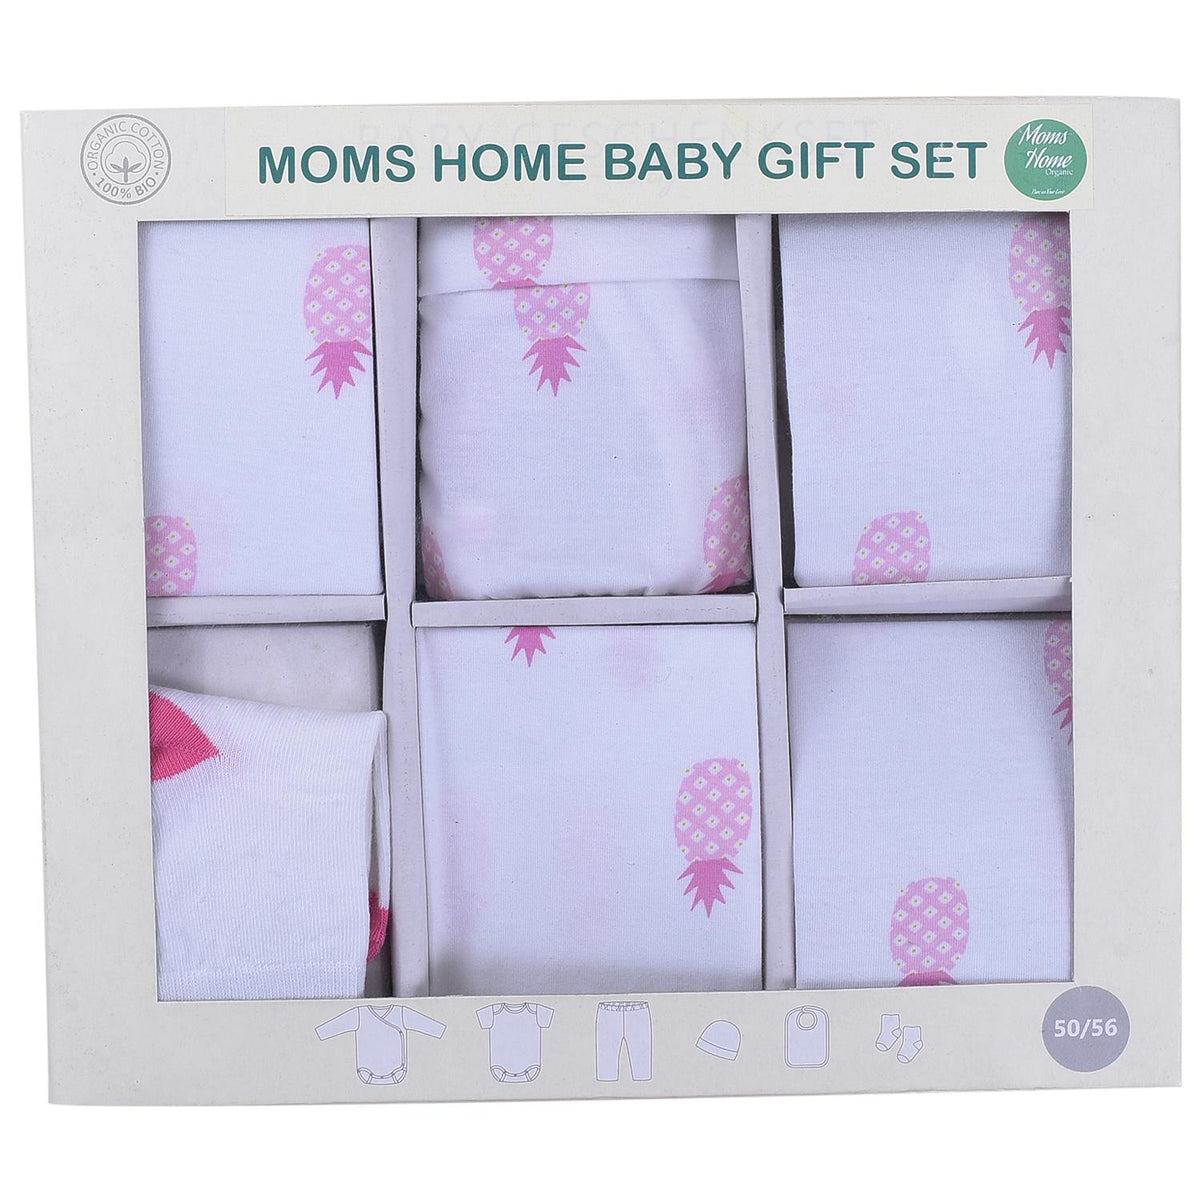 New Born Baby Unisex Organic cotton 6 Piece Gift Set -Pink Pineapple 3-6 Months